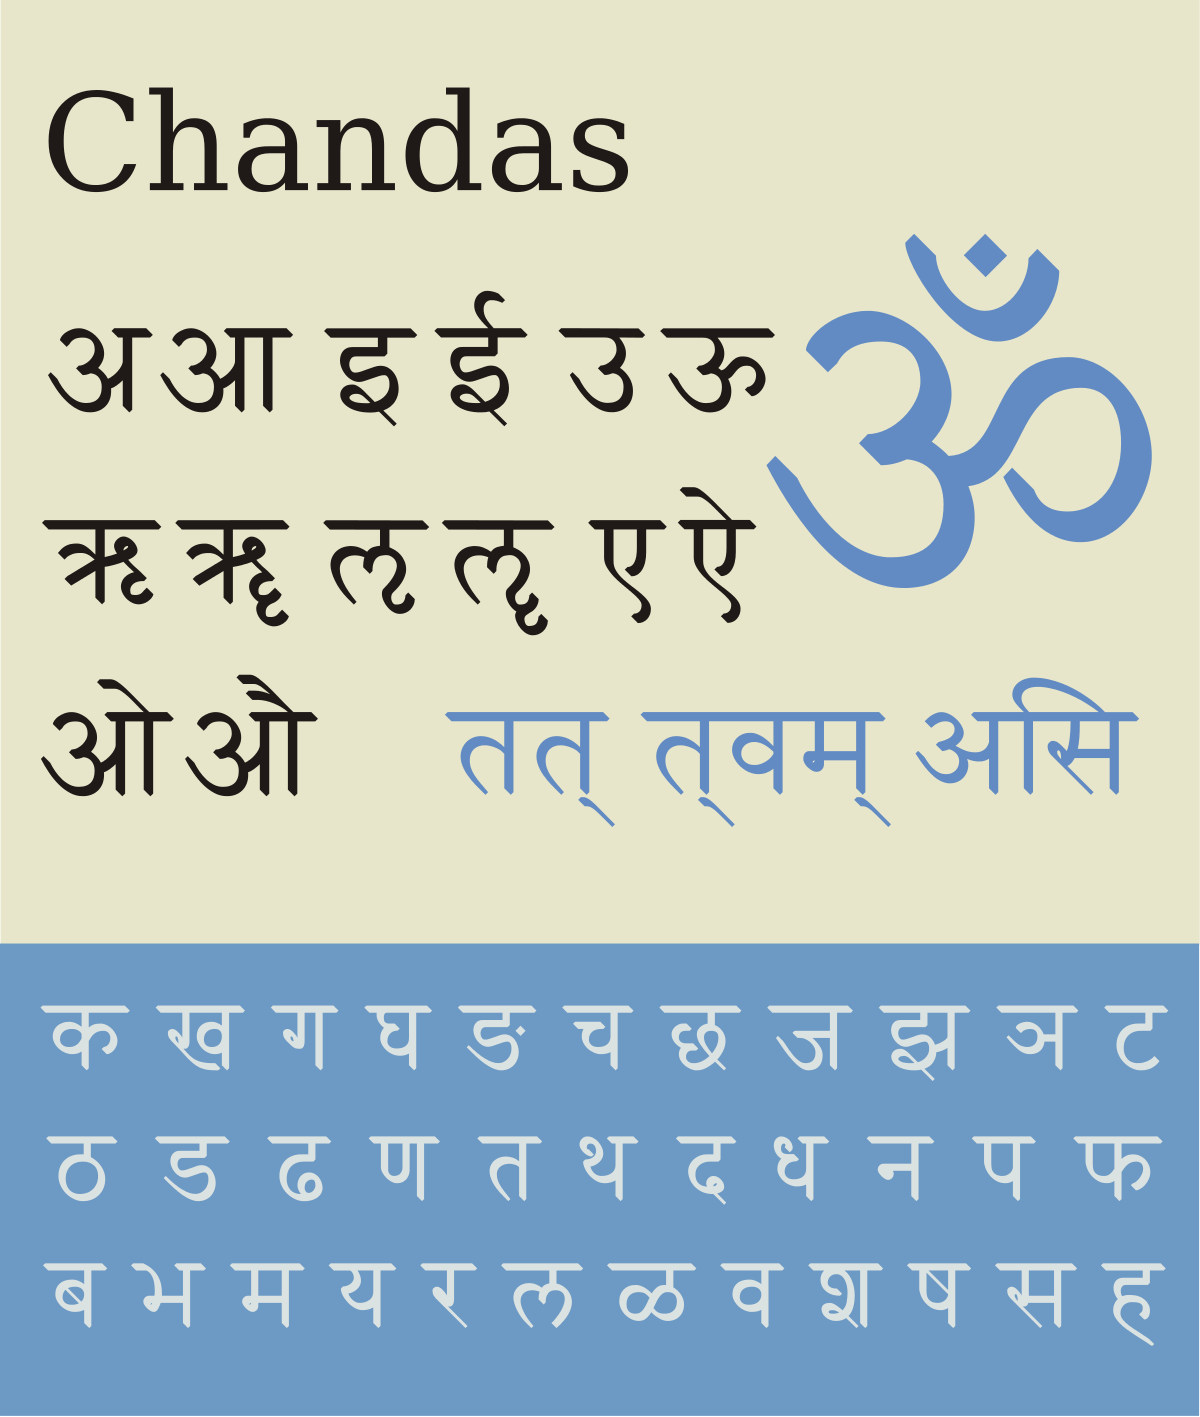 Hindi Typing Words List